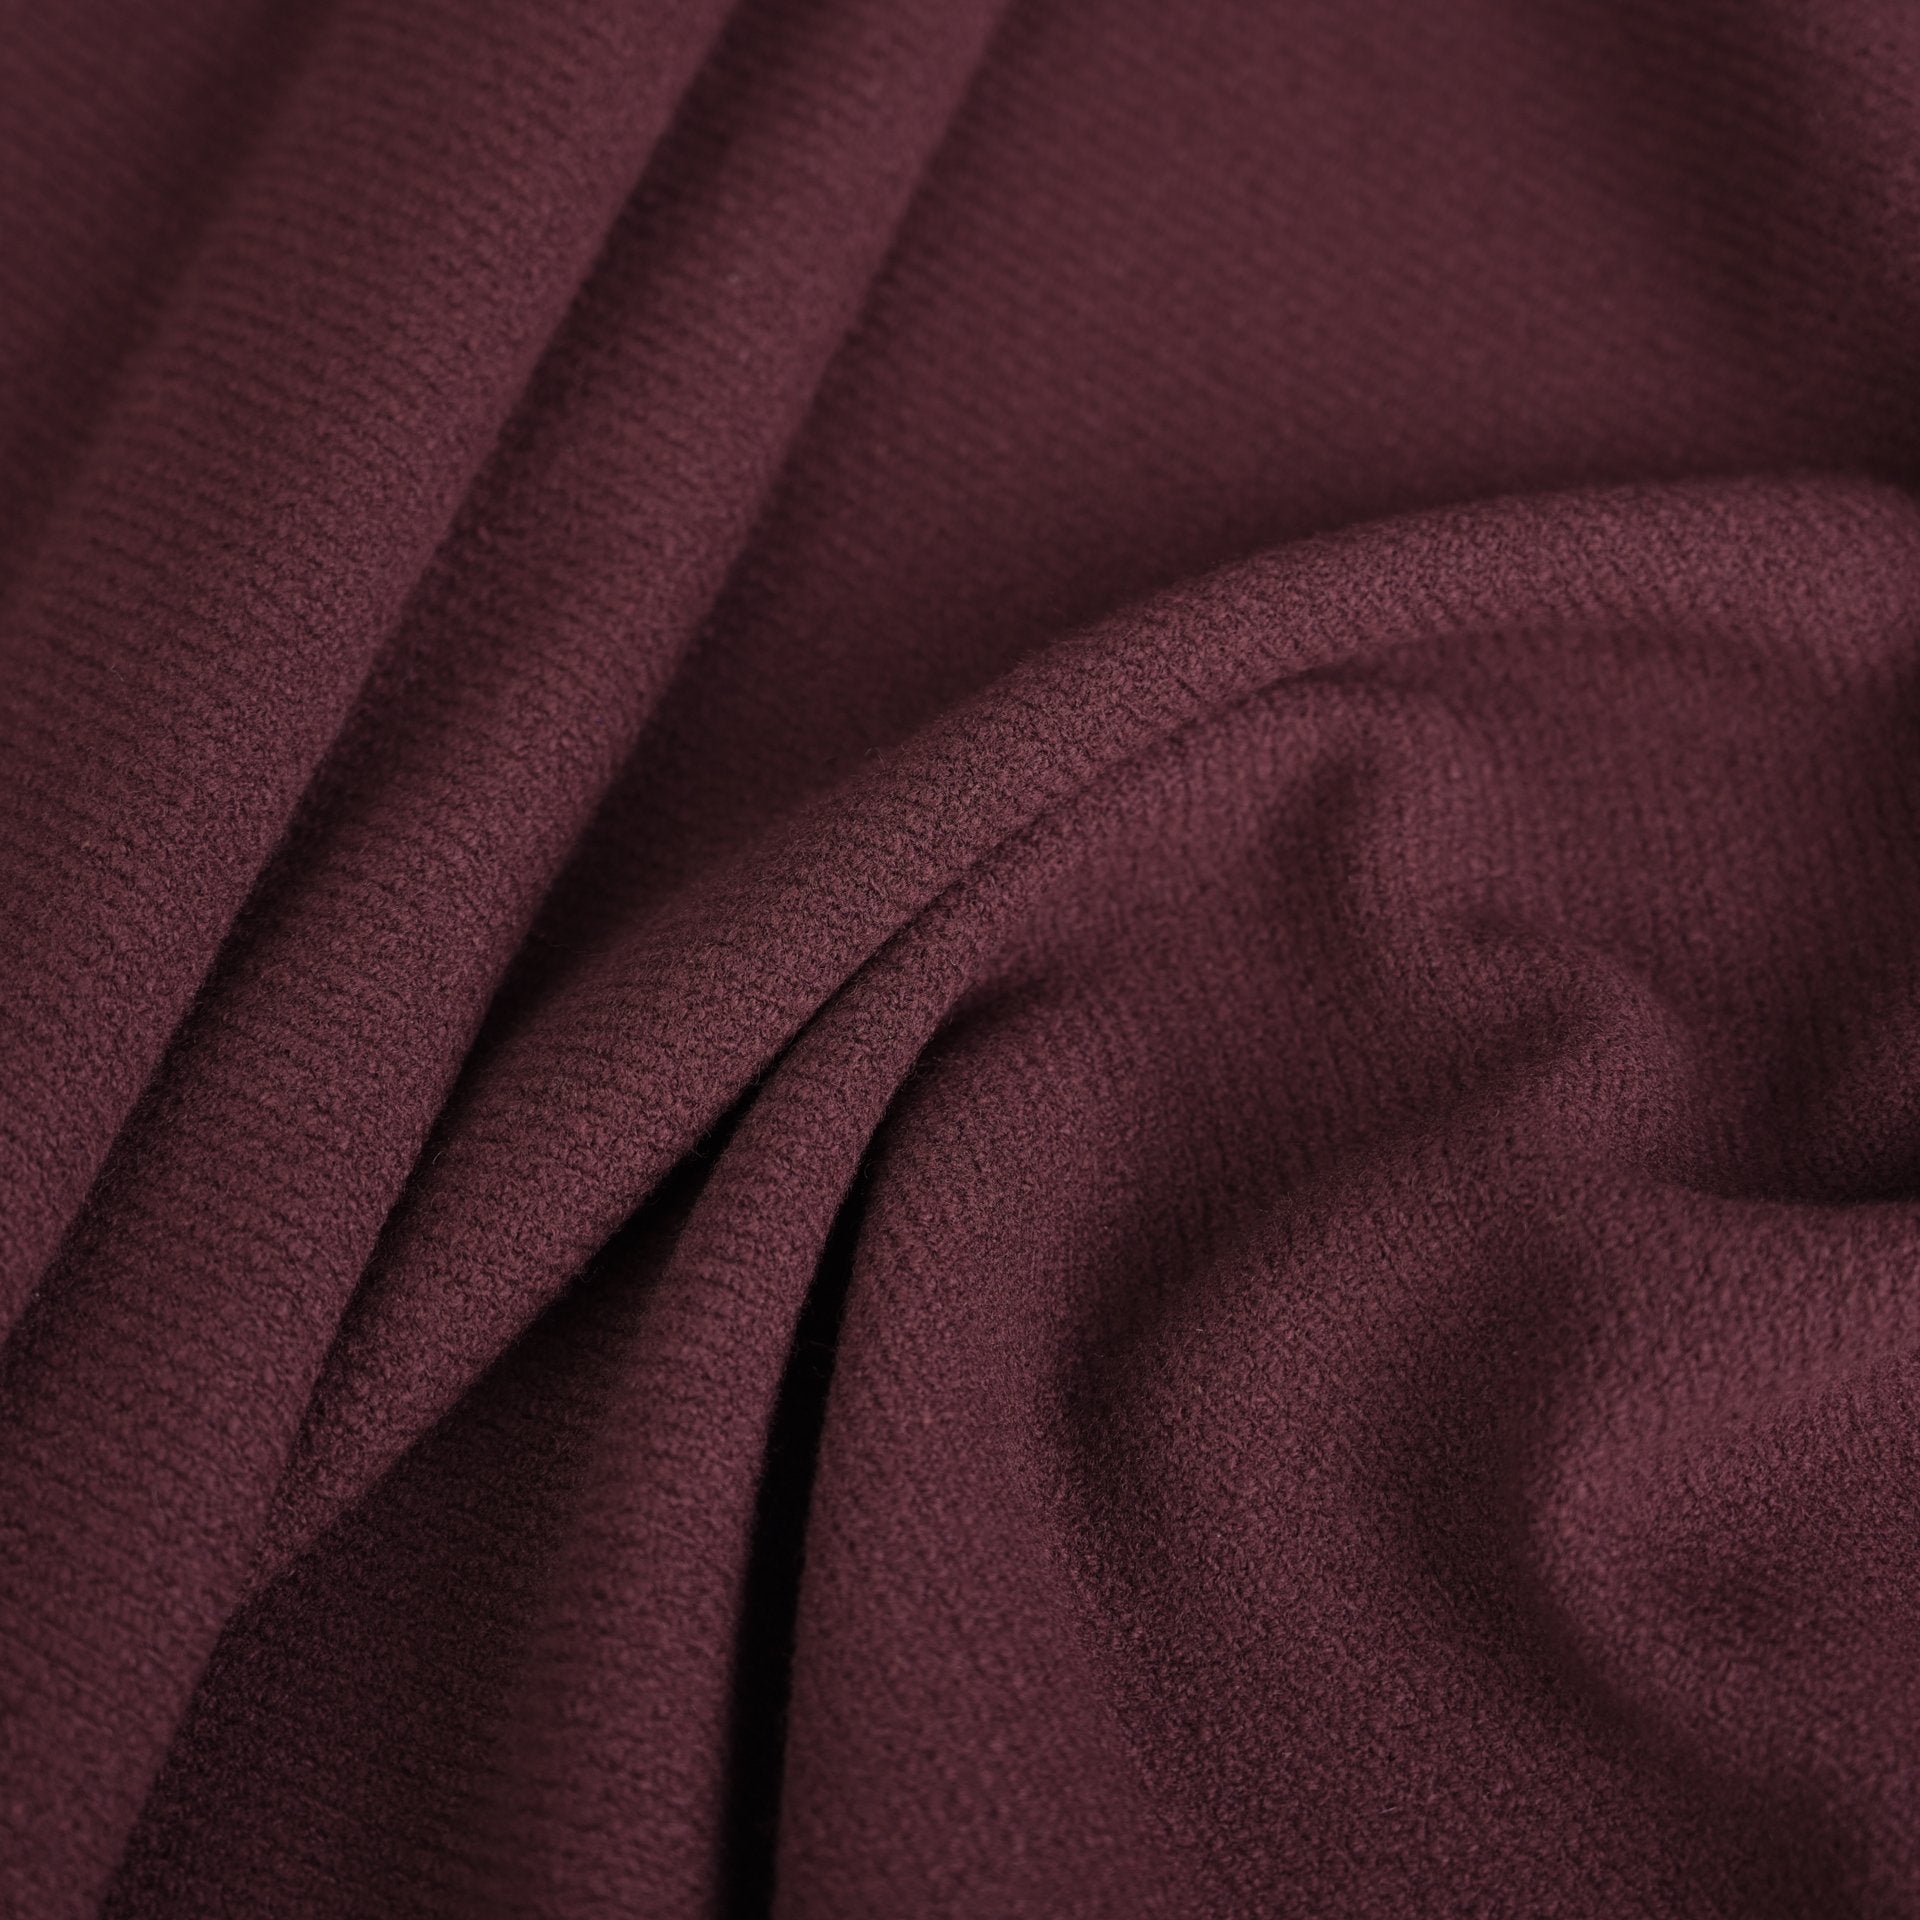 Wine Red Coating Fabric 97085